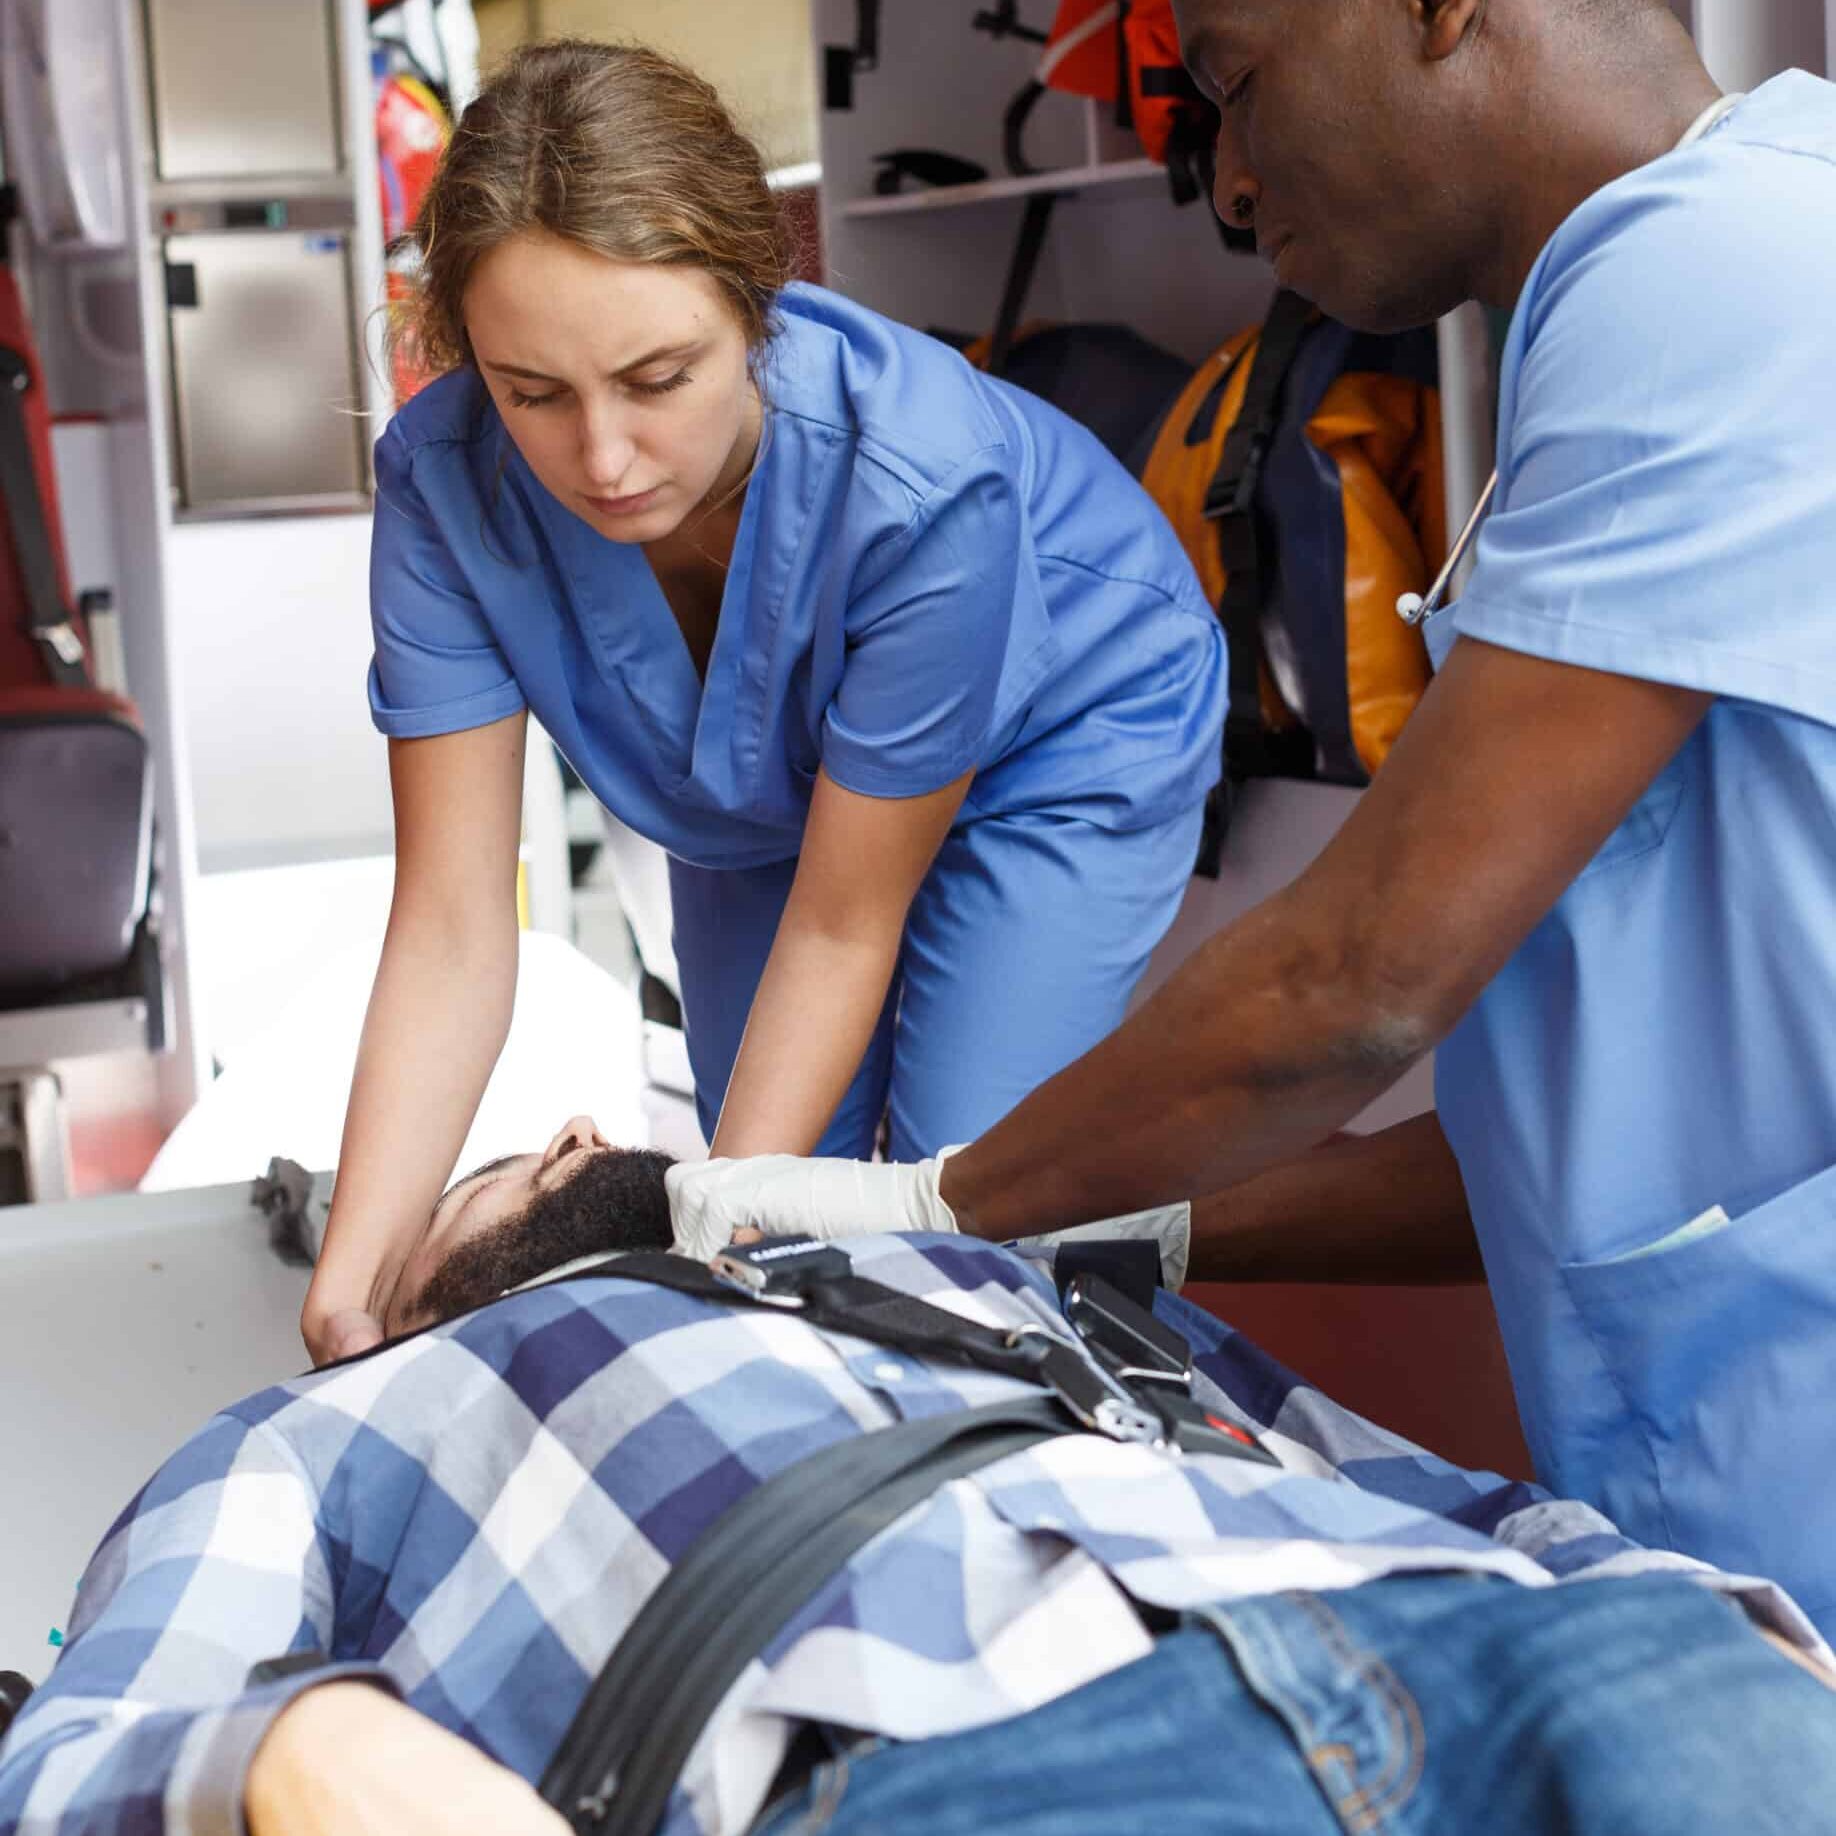 emergency doctors fixing patient on stretcher